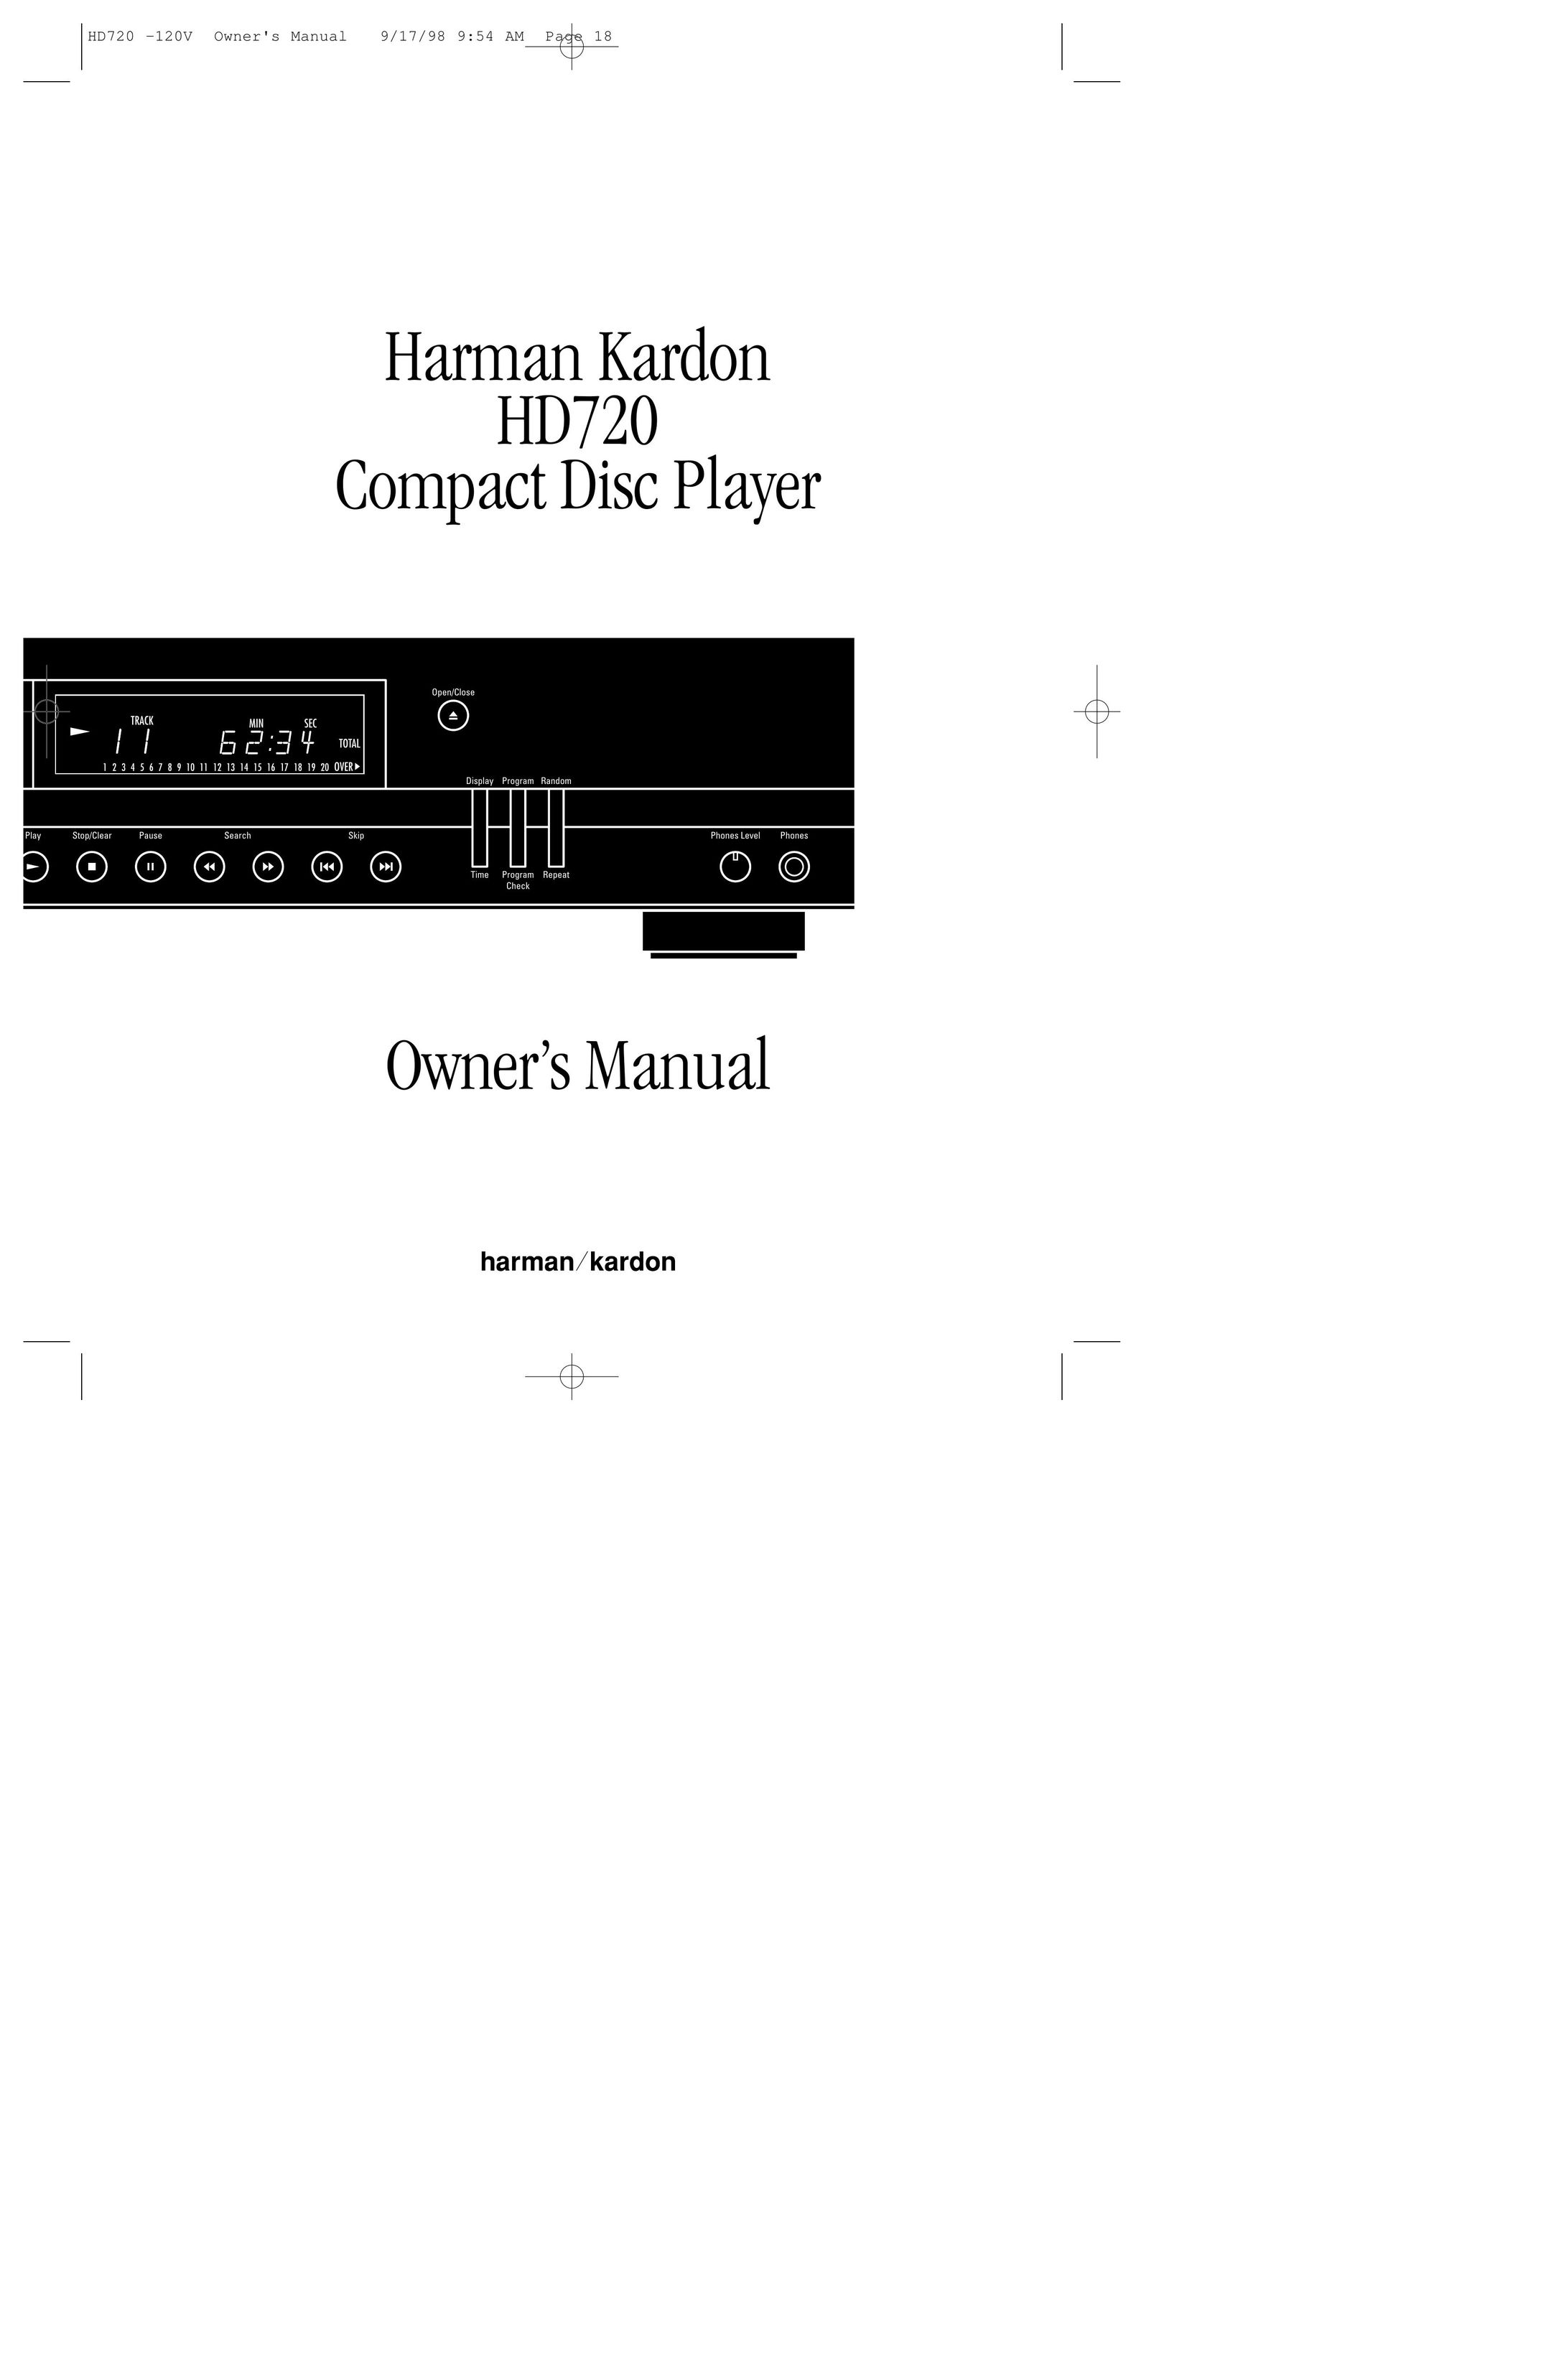 Harman-Kardon HD720 CD Player User Manual